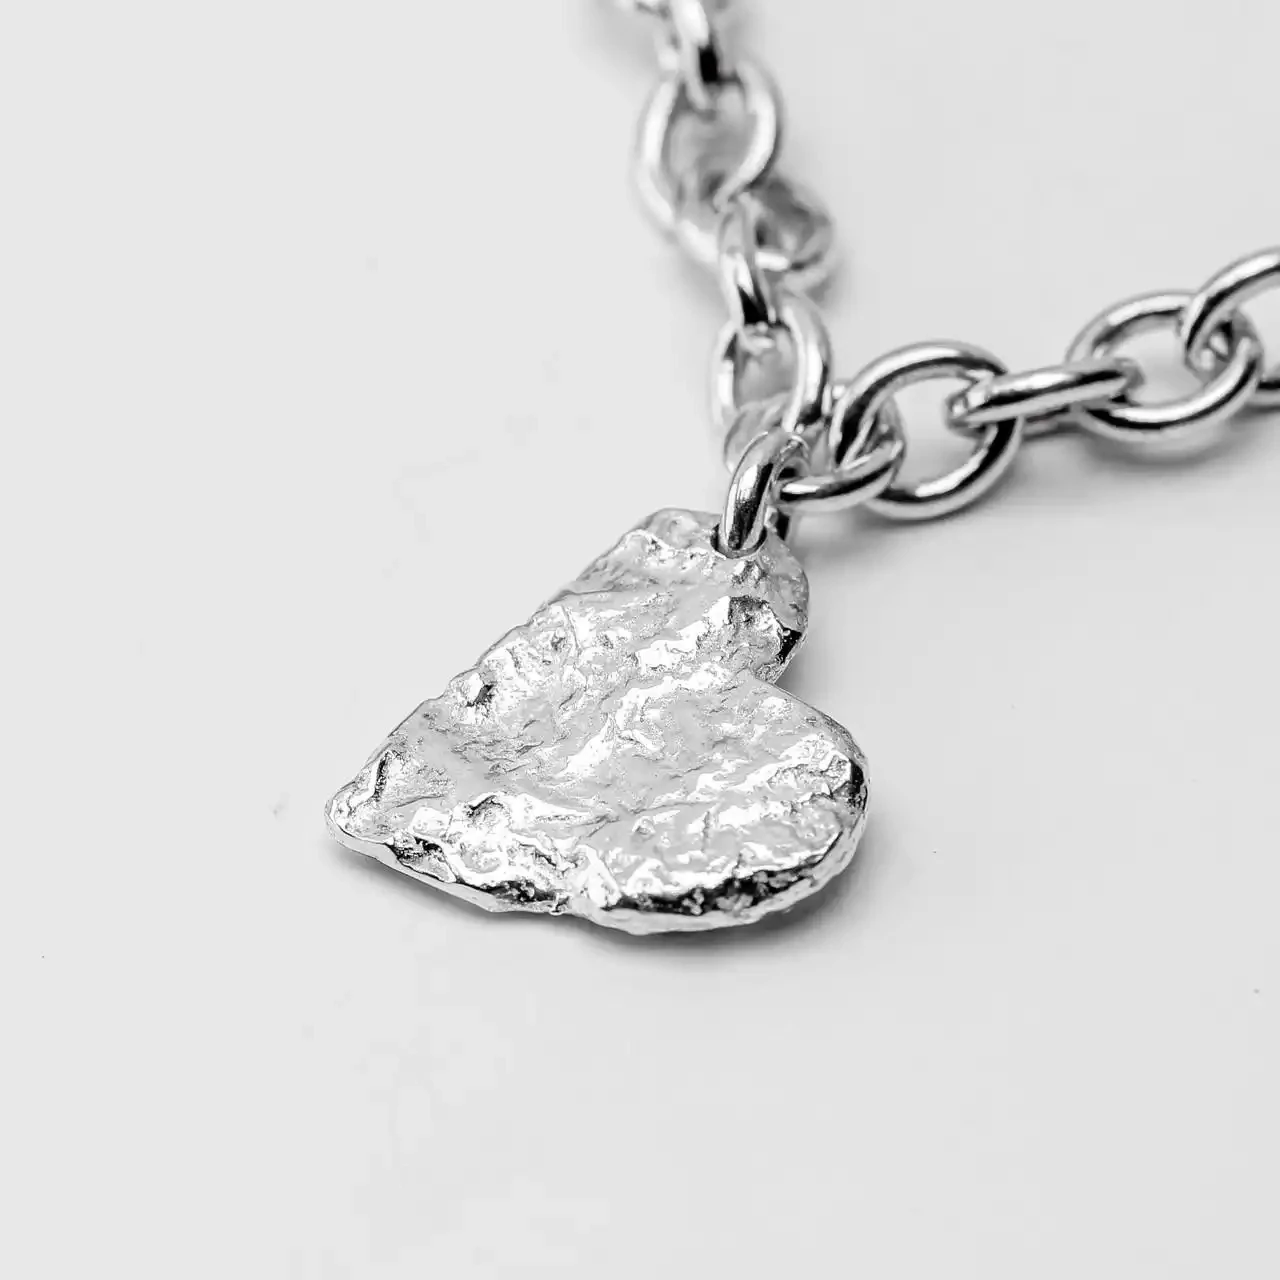 Melt My Heart Silver Bracelet by Silverfish